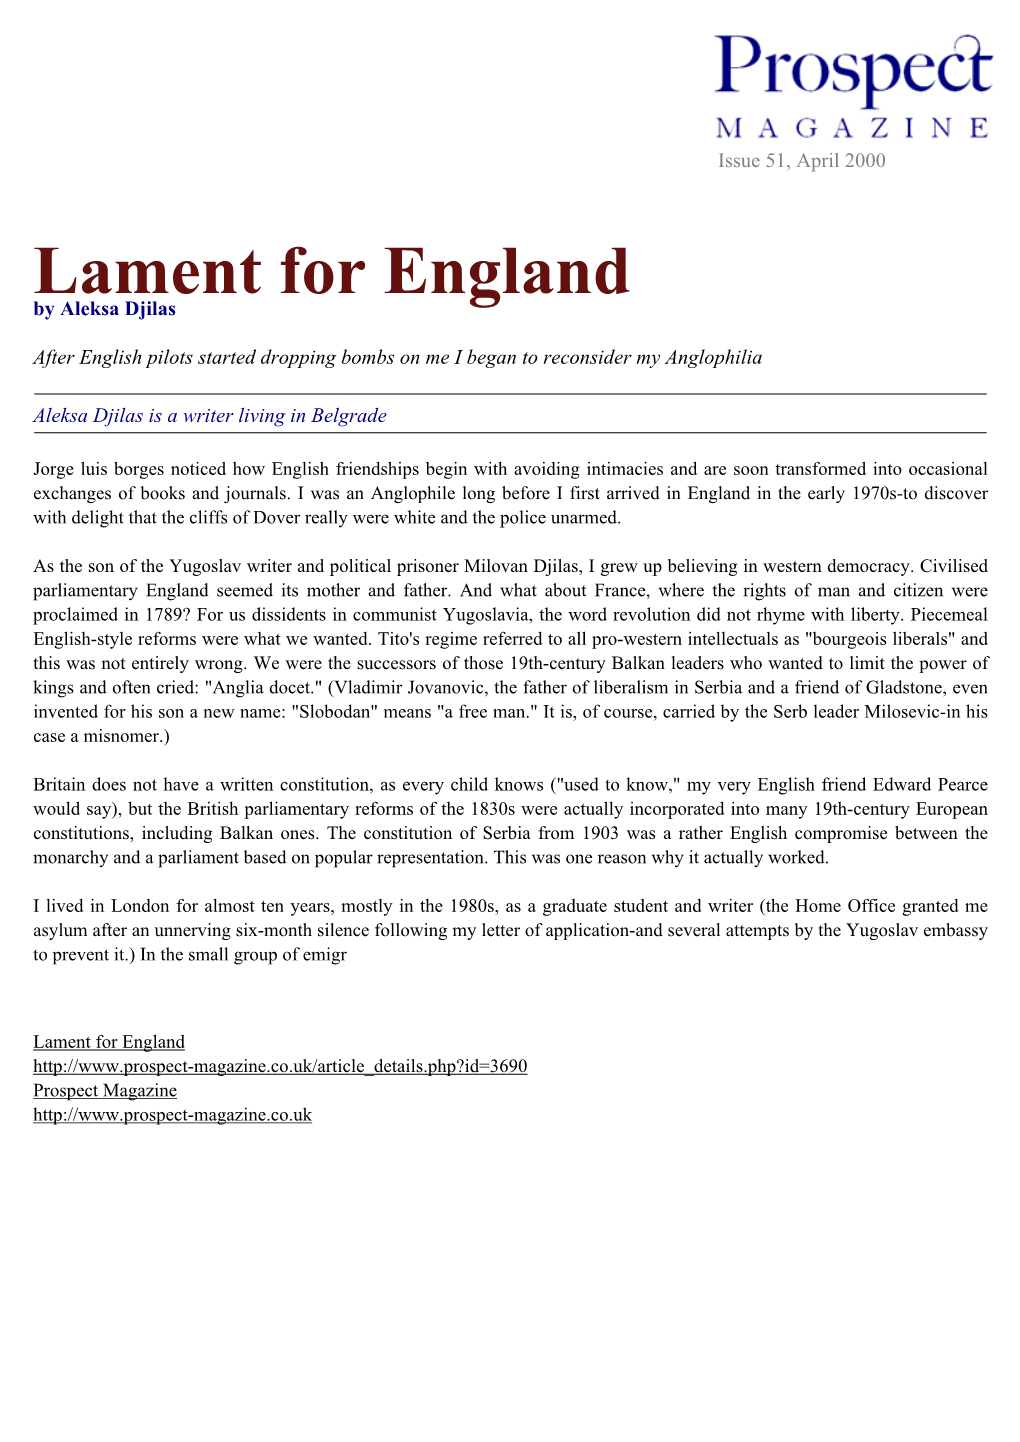 Lament for England by Aleksa Djilas